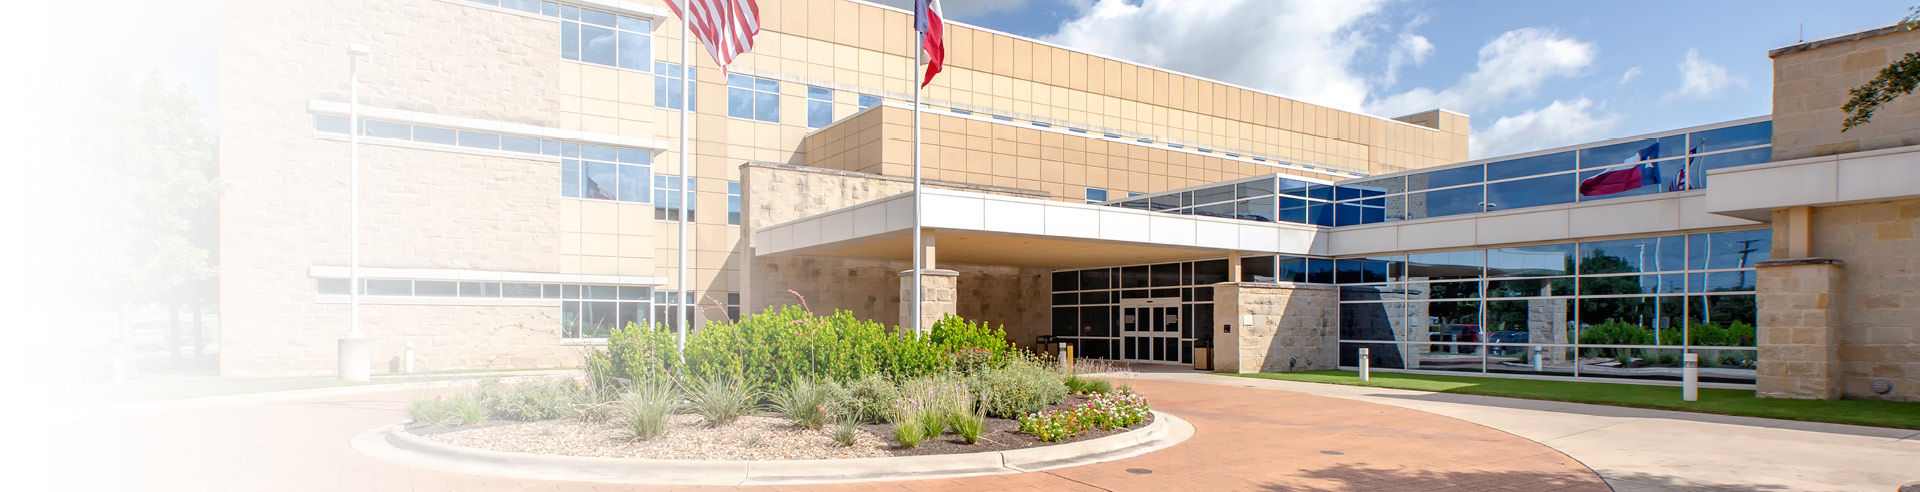 Encompass Health Rehabilitation Hospital of Round Rock exterior